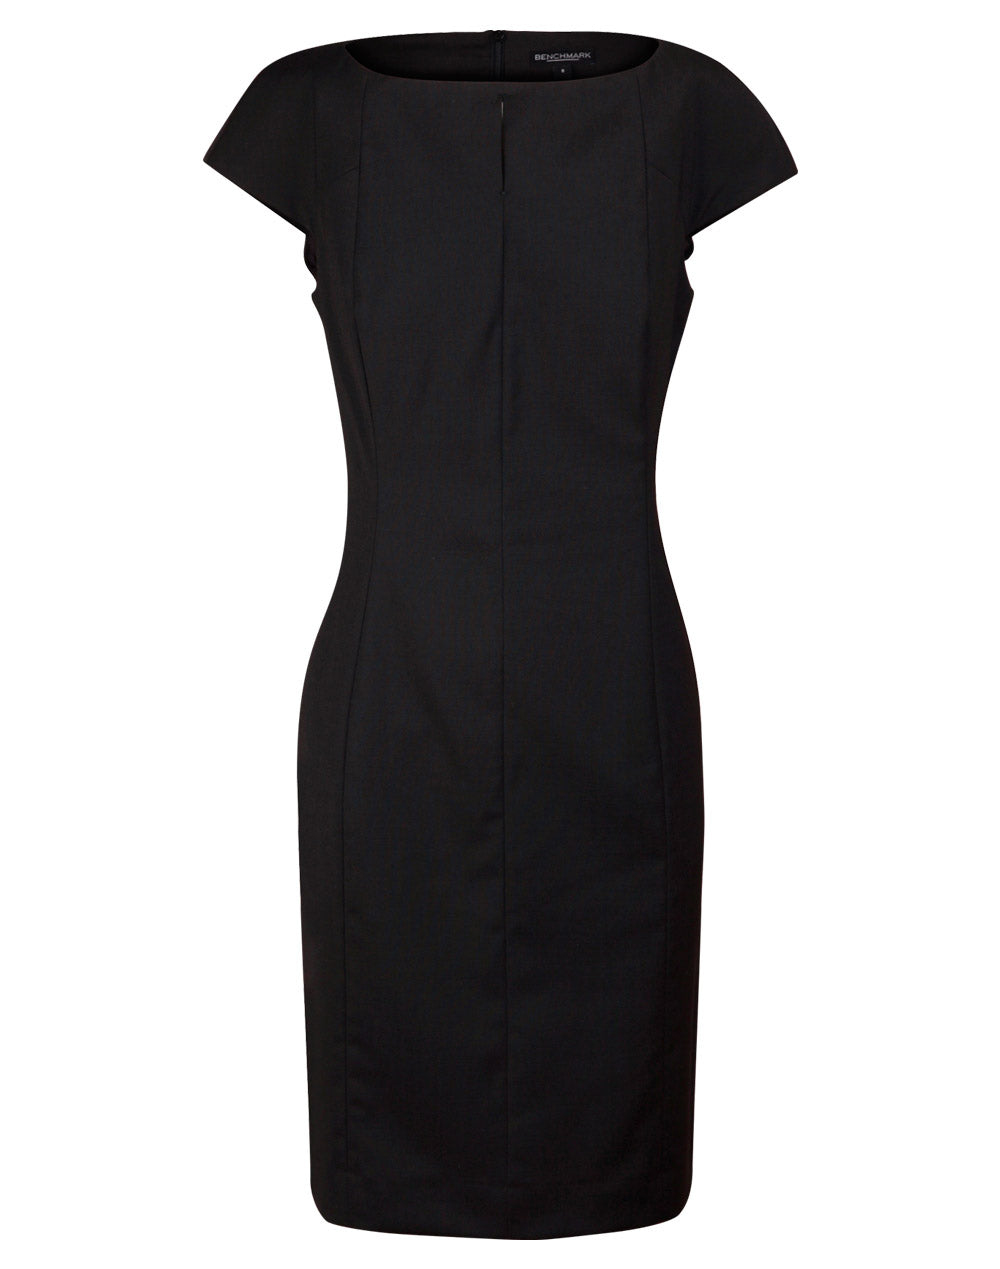 JCM9281 Ladies’ Wool Blend Stretch Cap Sleeve Dress